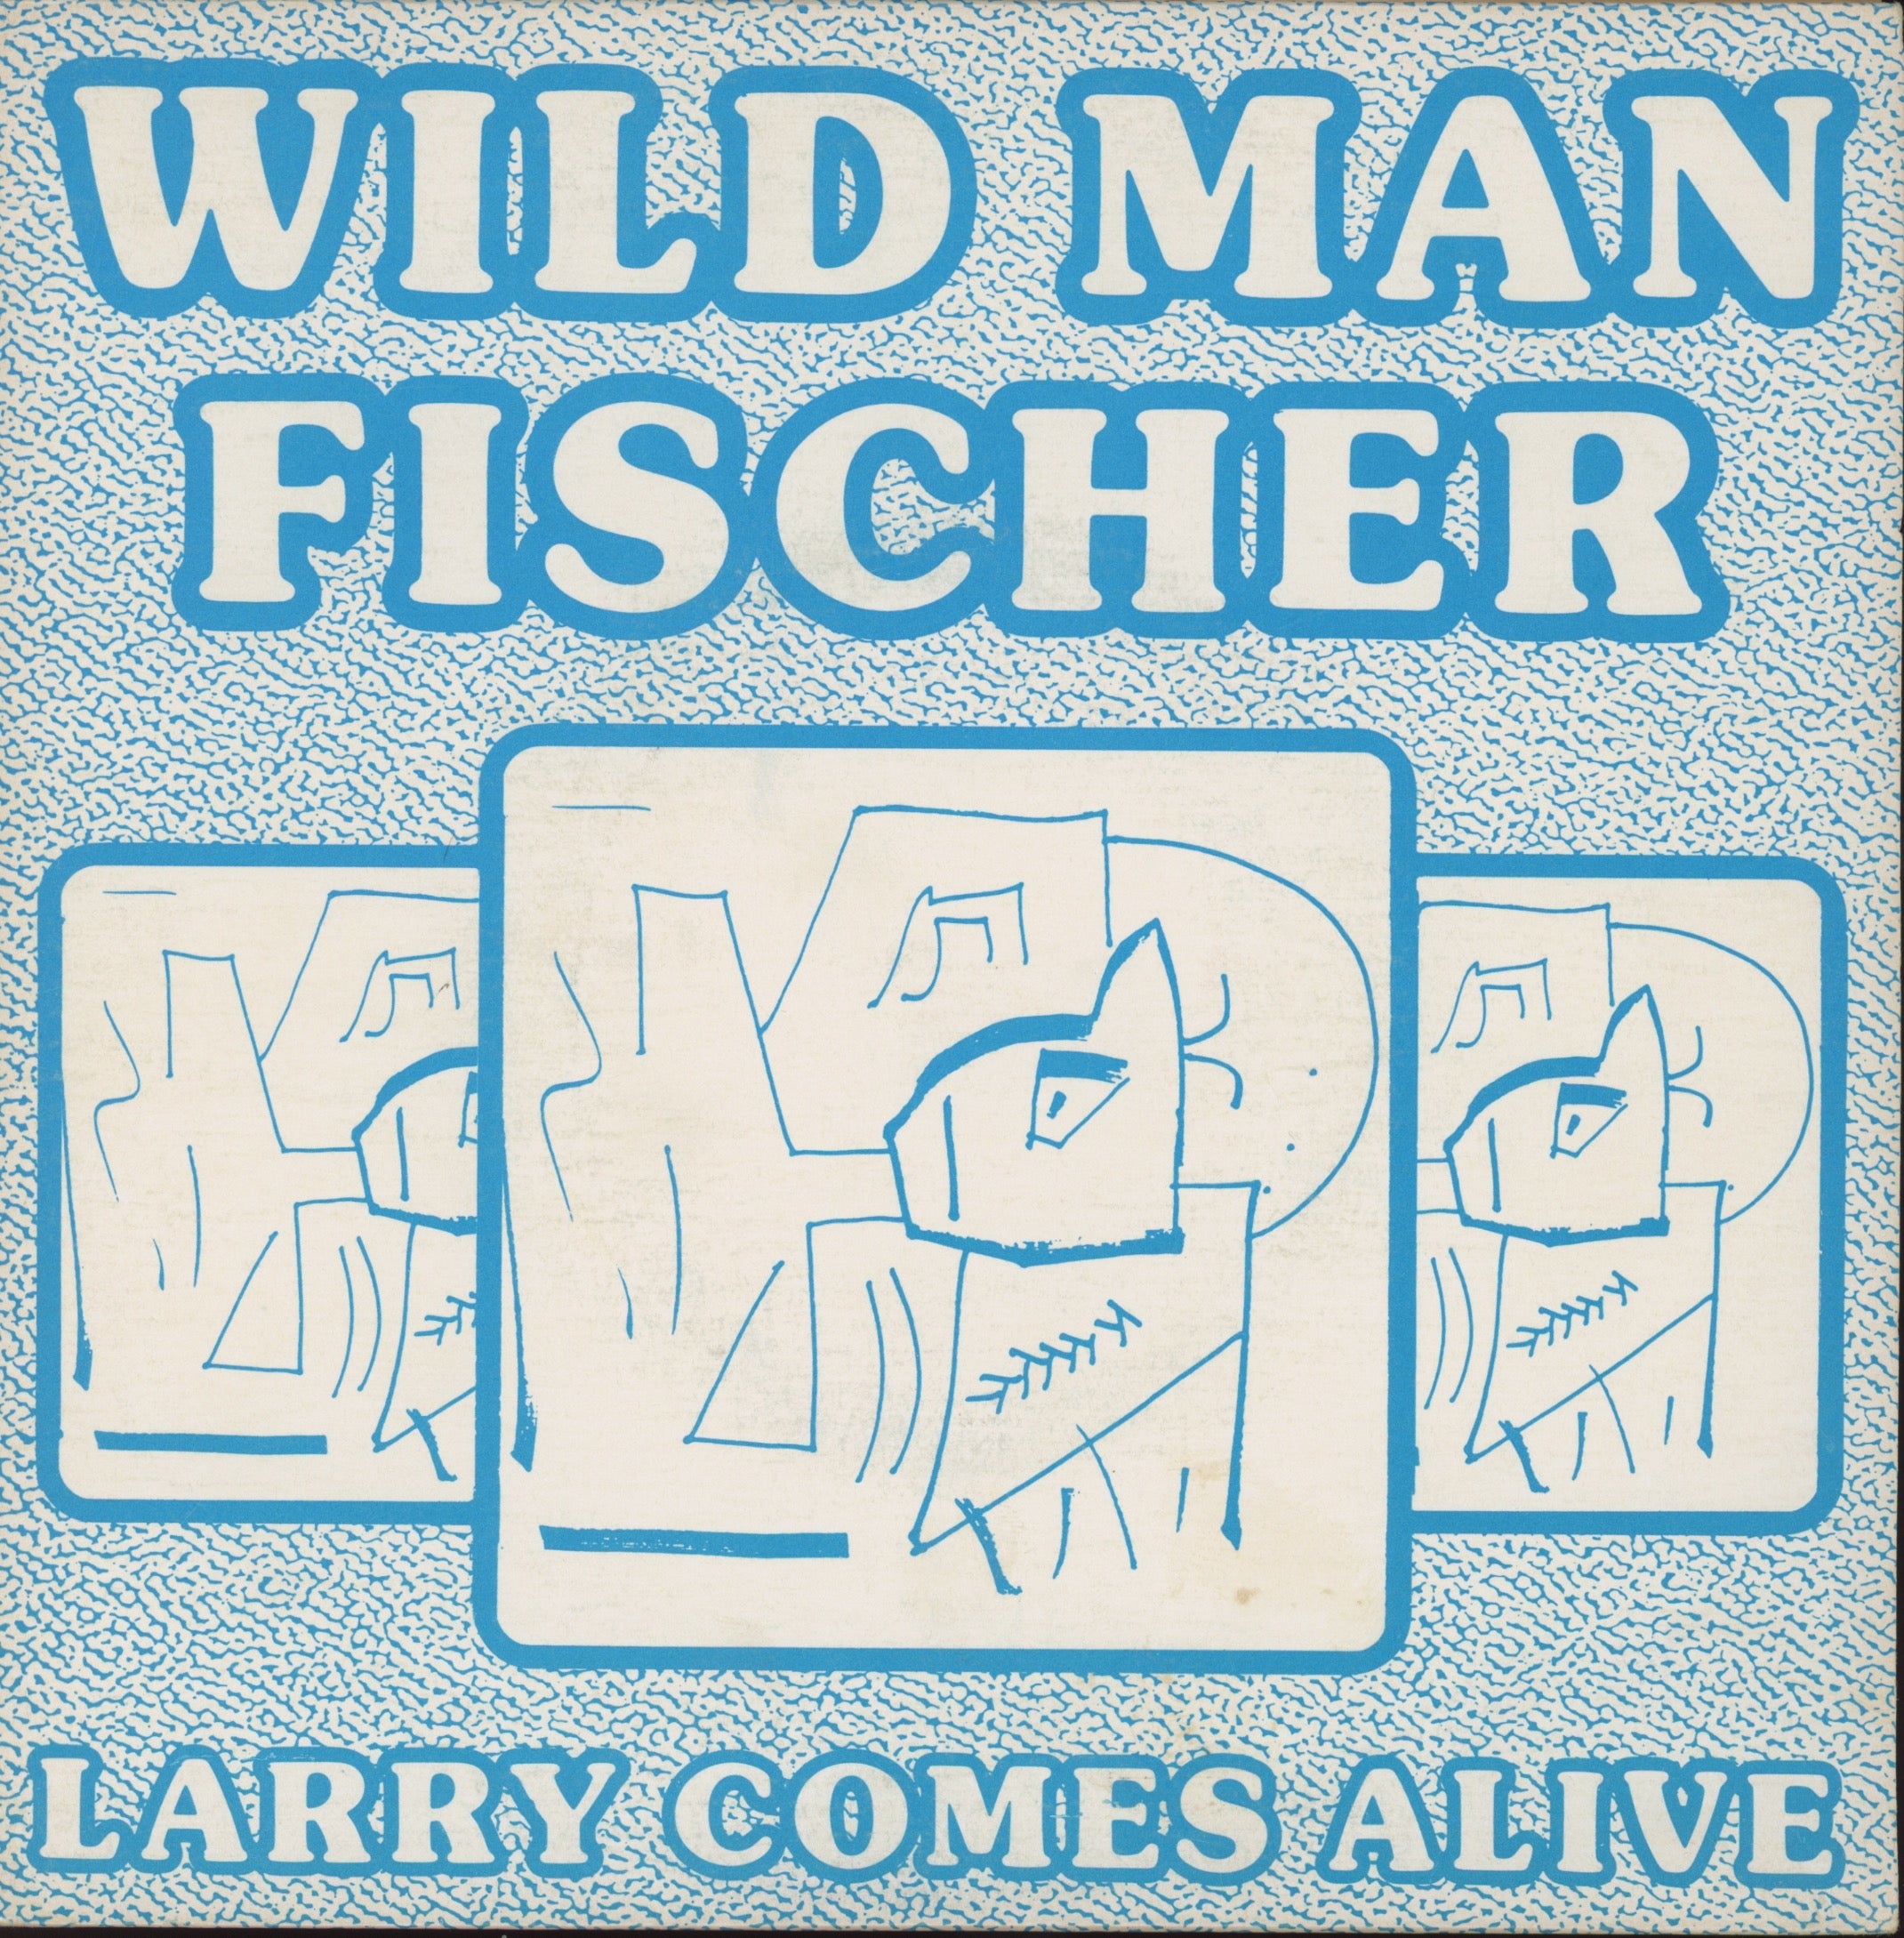 Wild Man Fischer - Larry Comes Alive on A.T.C.